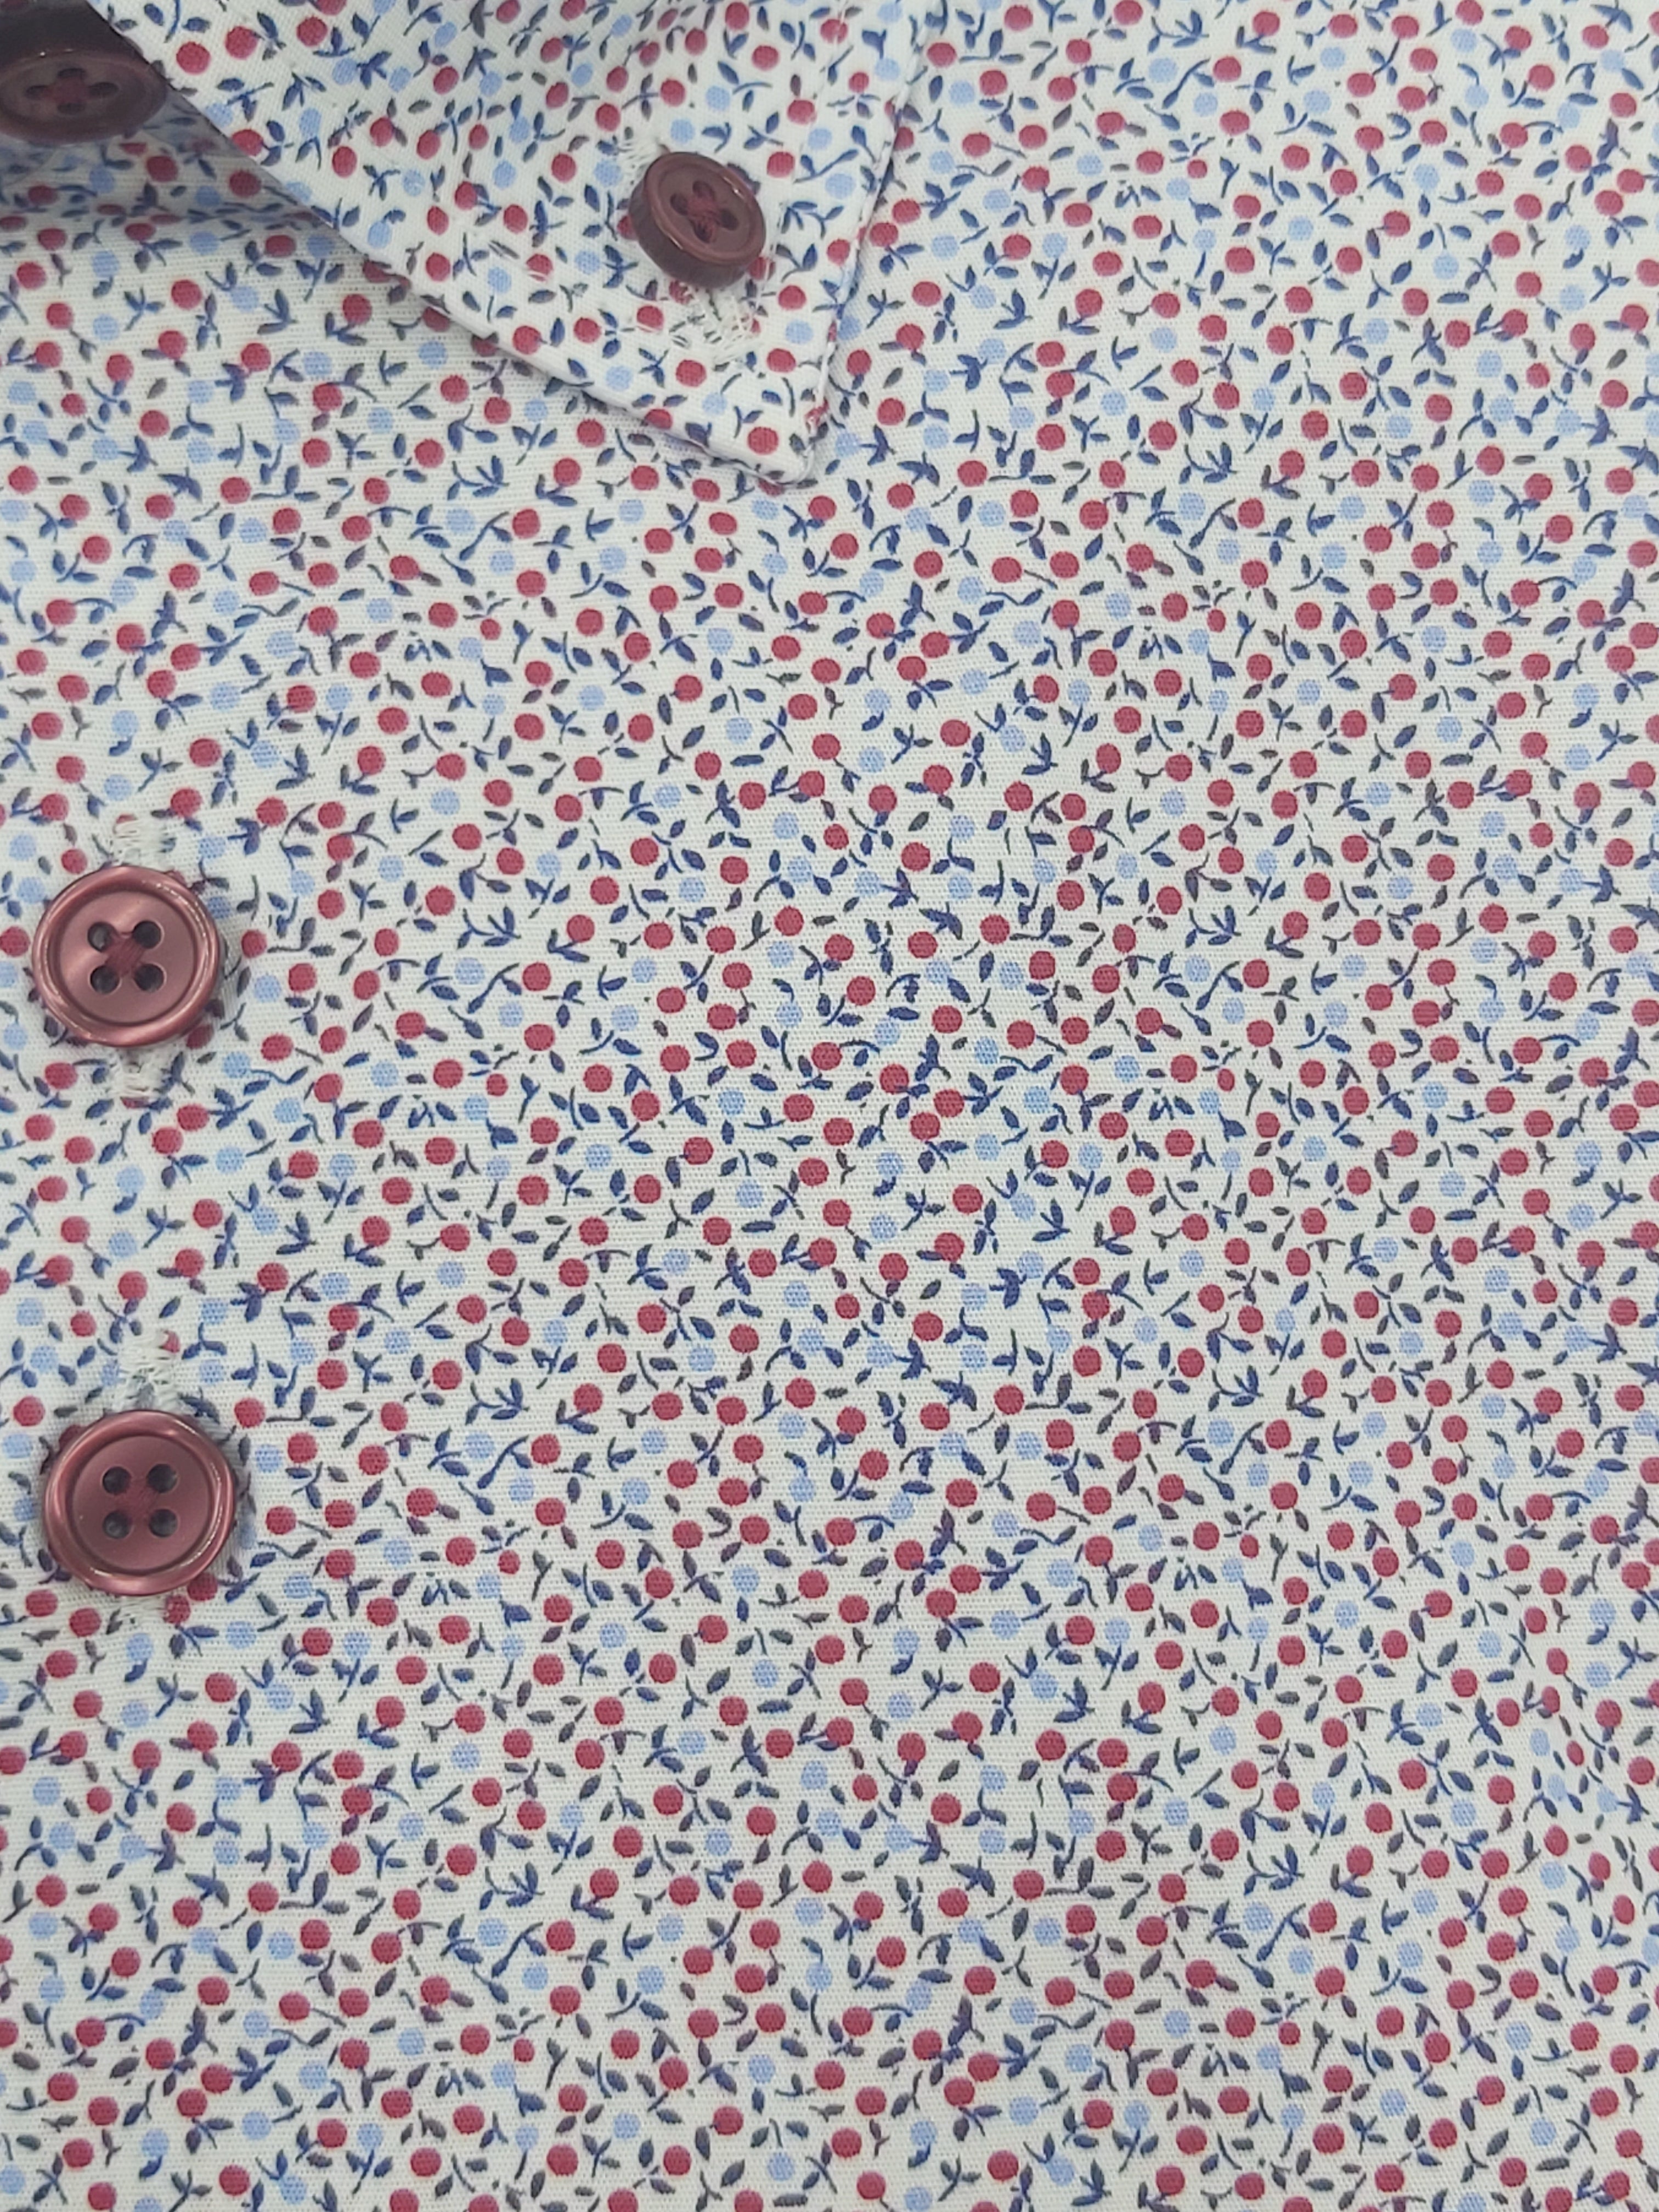 Men's Button Down Red/Blue Flower Print Shirt-Close Up View